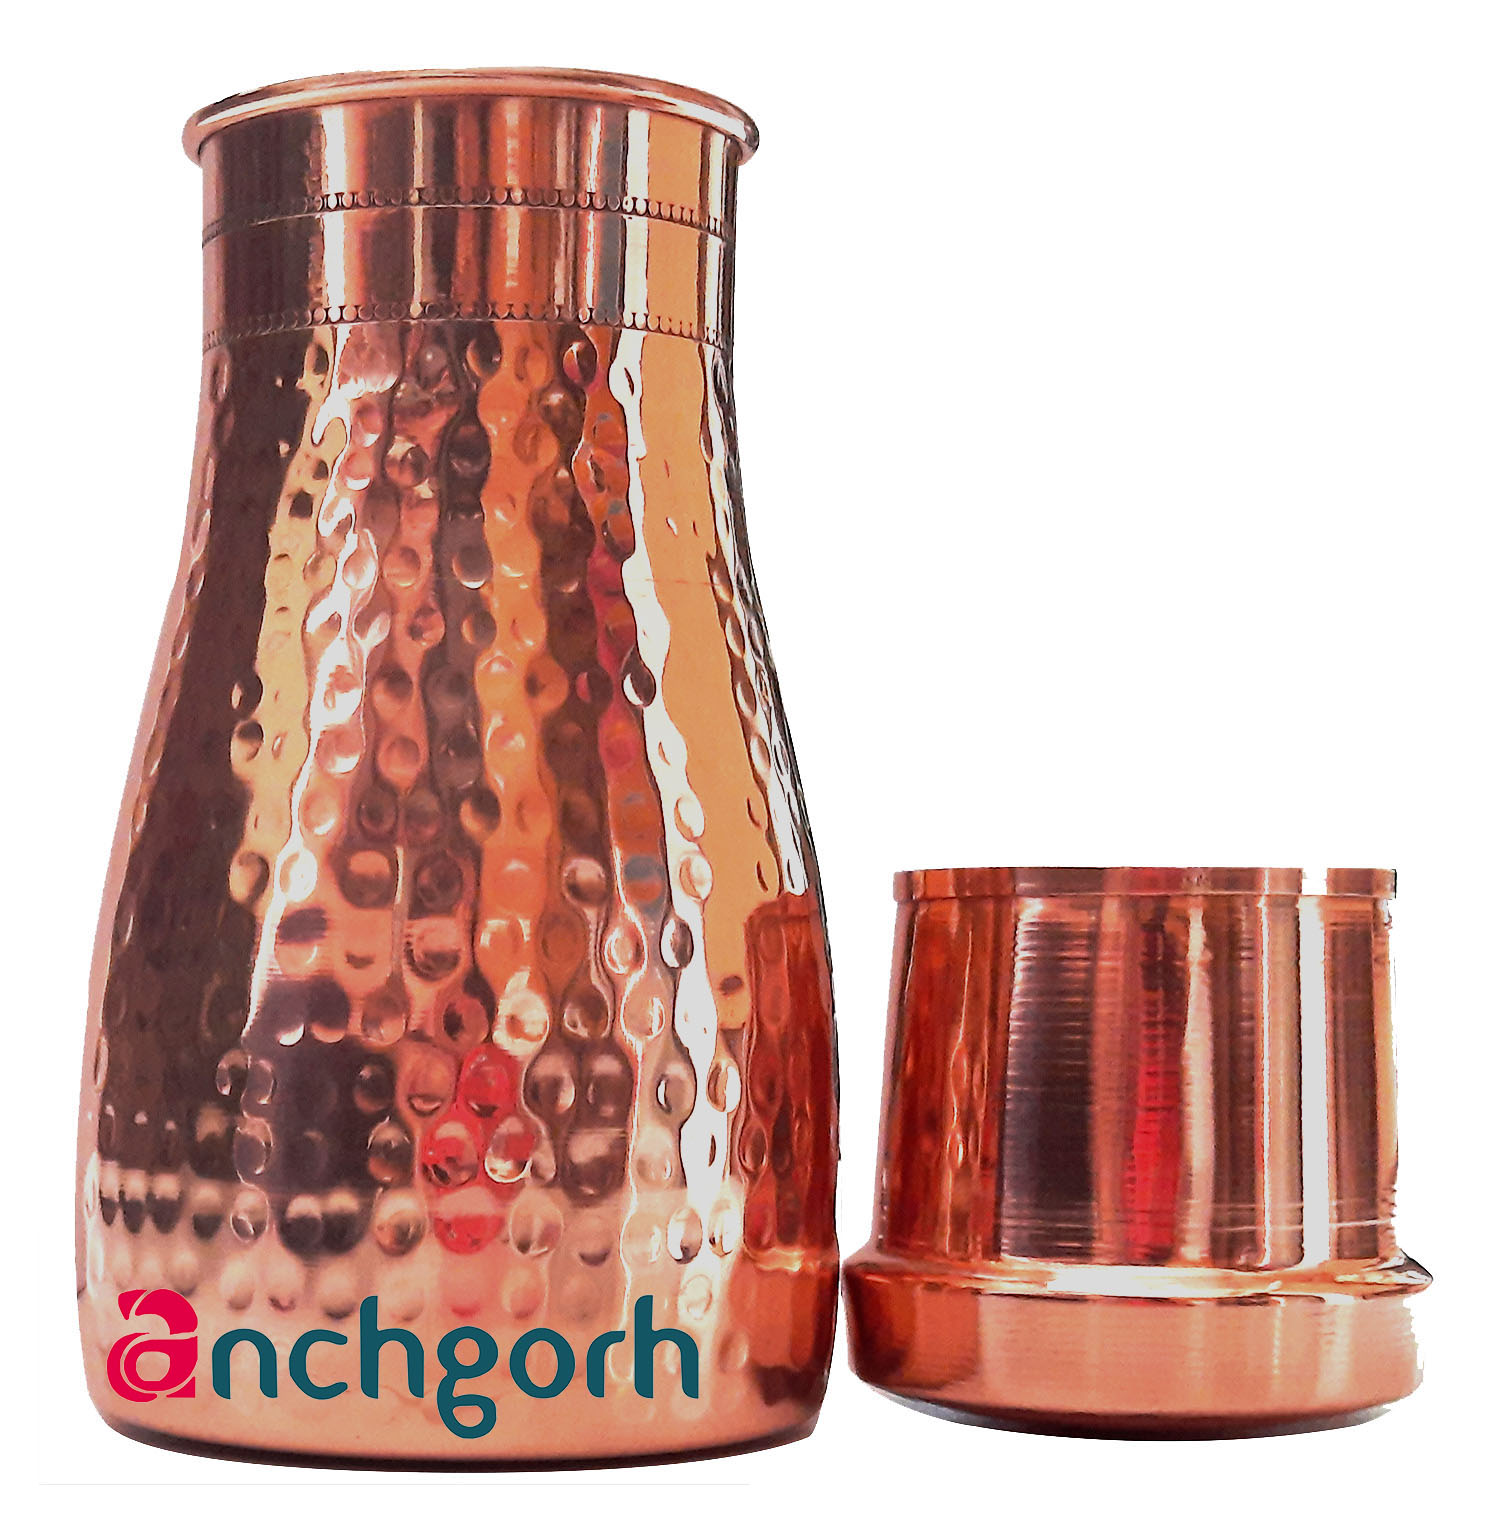 Anchgorh Bedroom Copper Bottle with Inbuilt Glass, Copper Sugar Pot/jar Hammered from Anchgorh